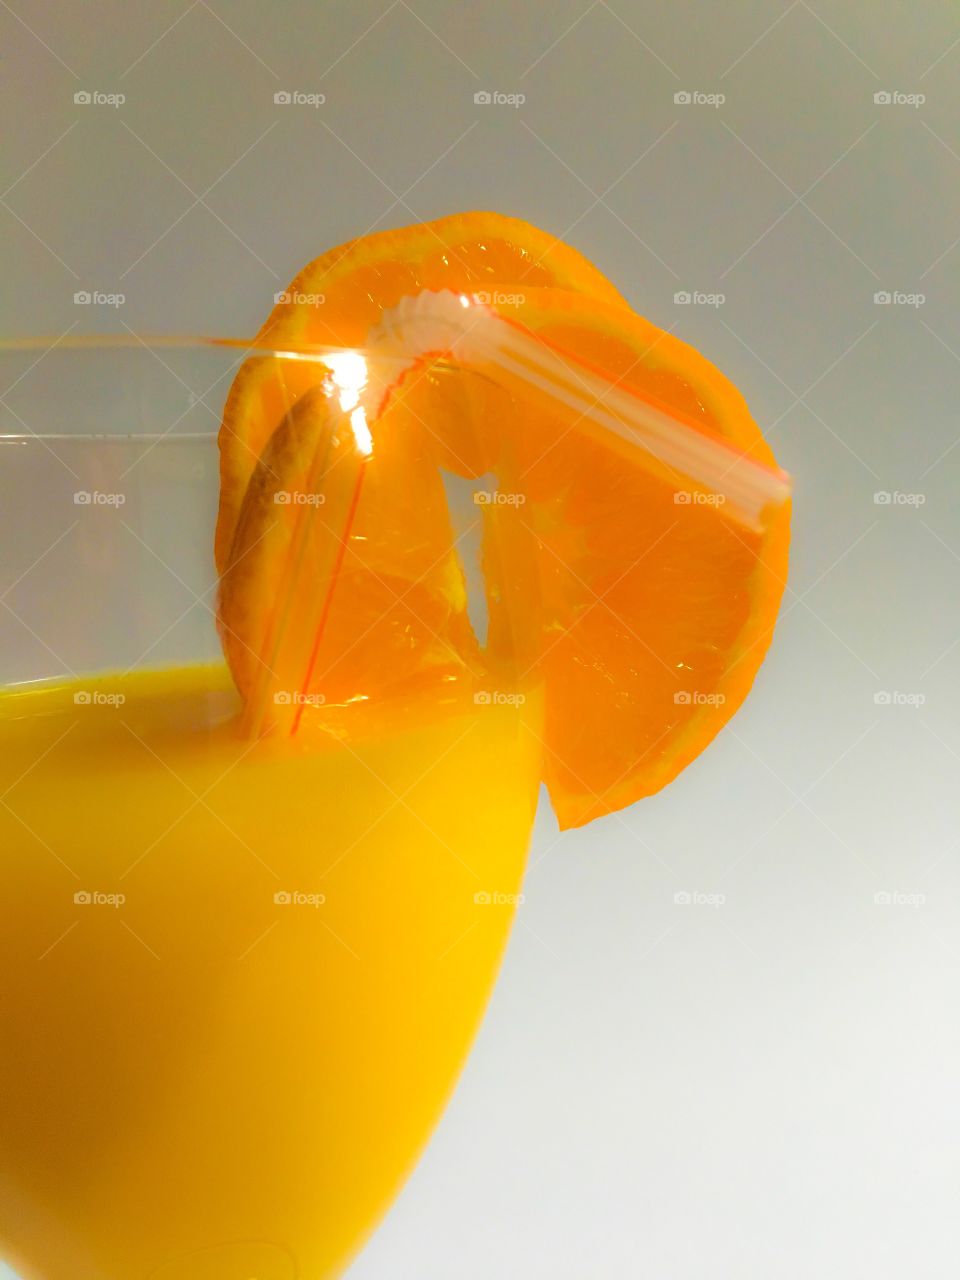 Glass of mandarin orange juice